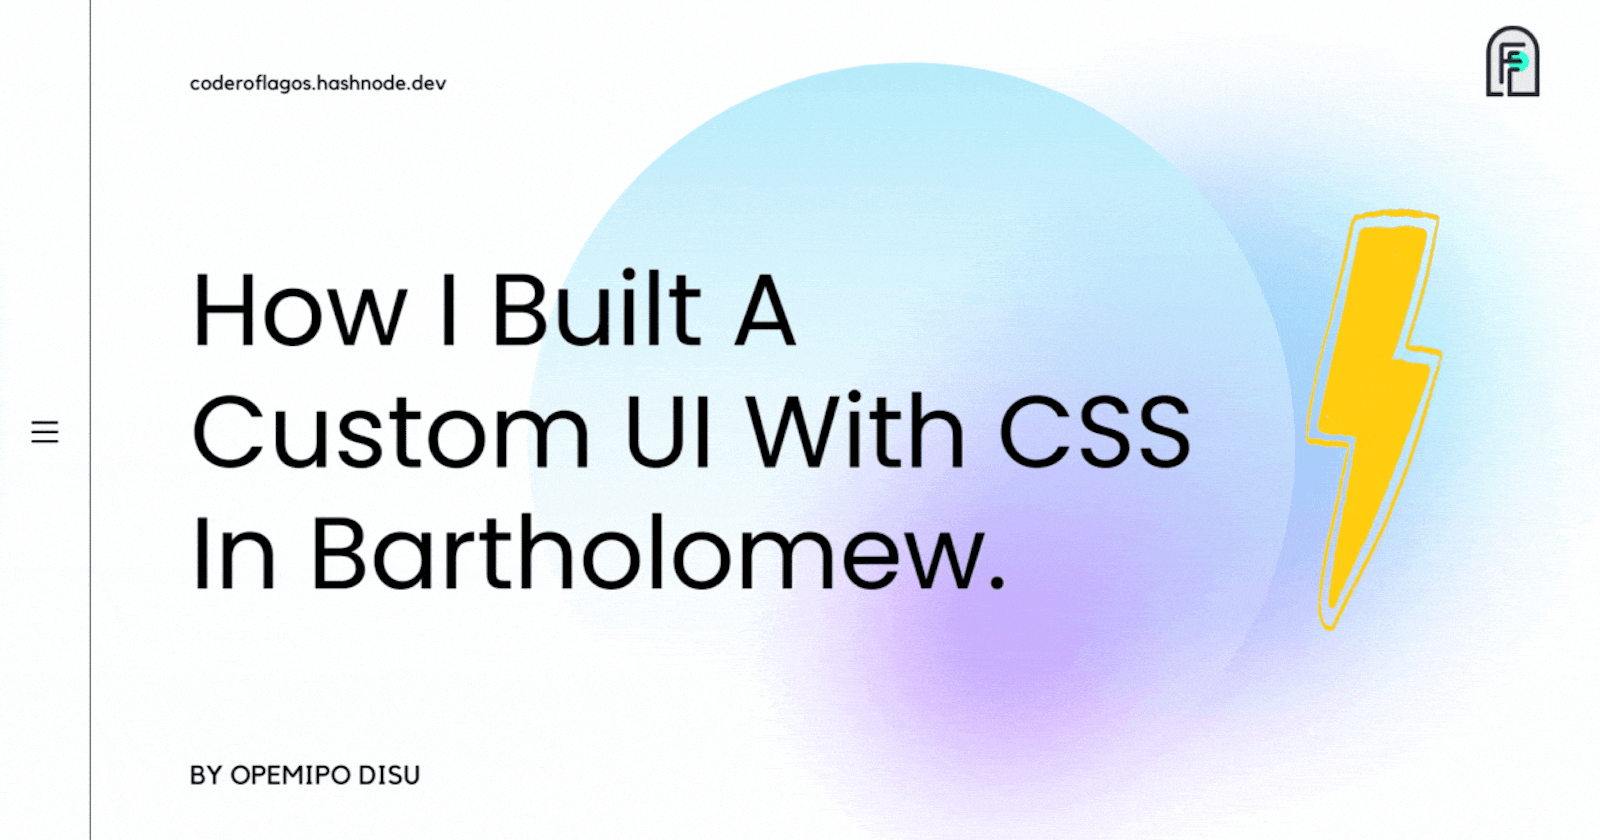 How I Built A Custom UI With CSS In Bartholomew